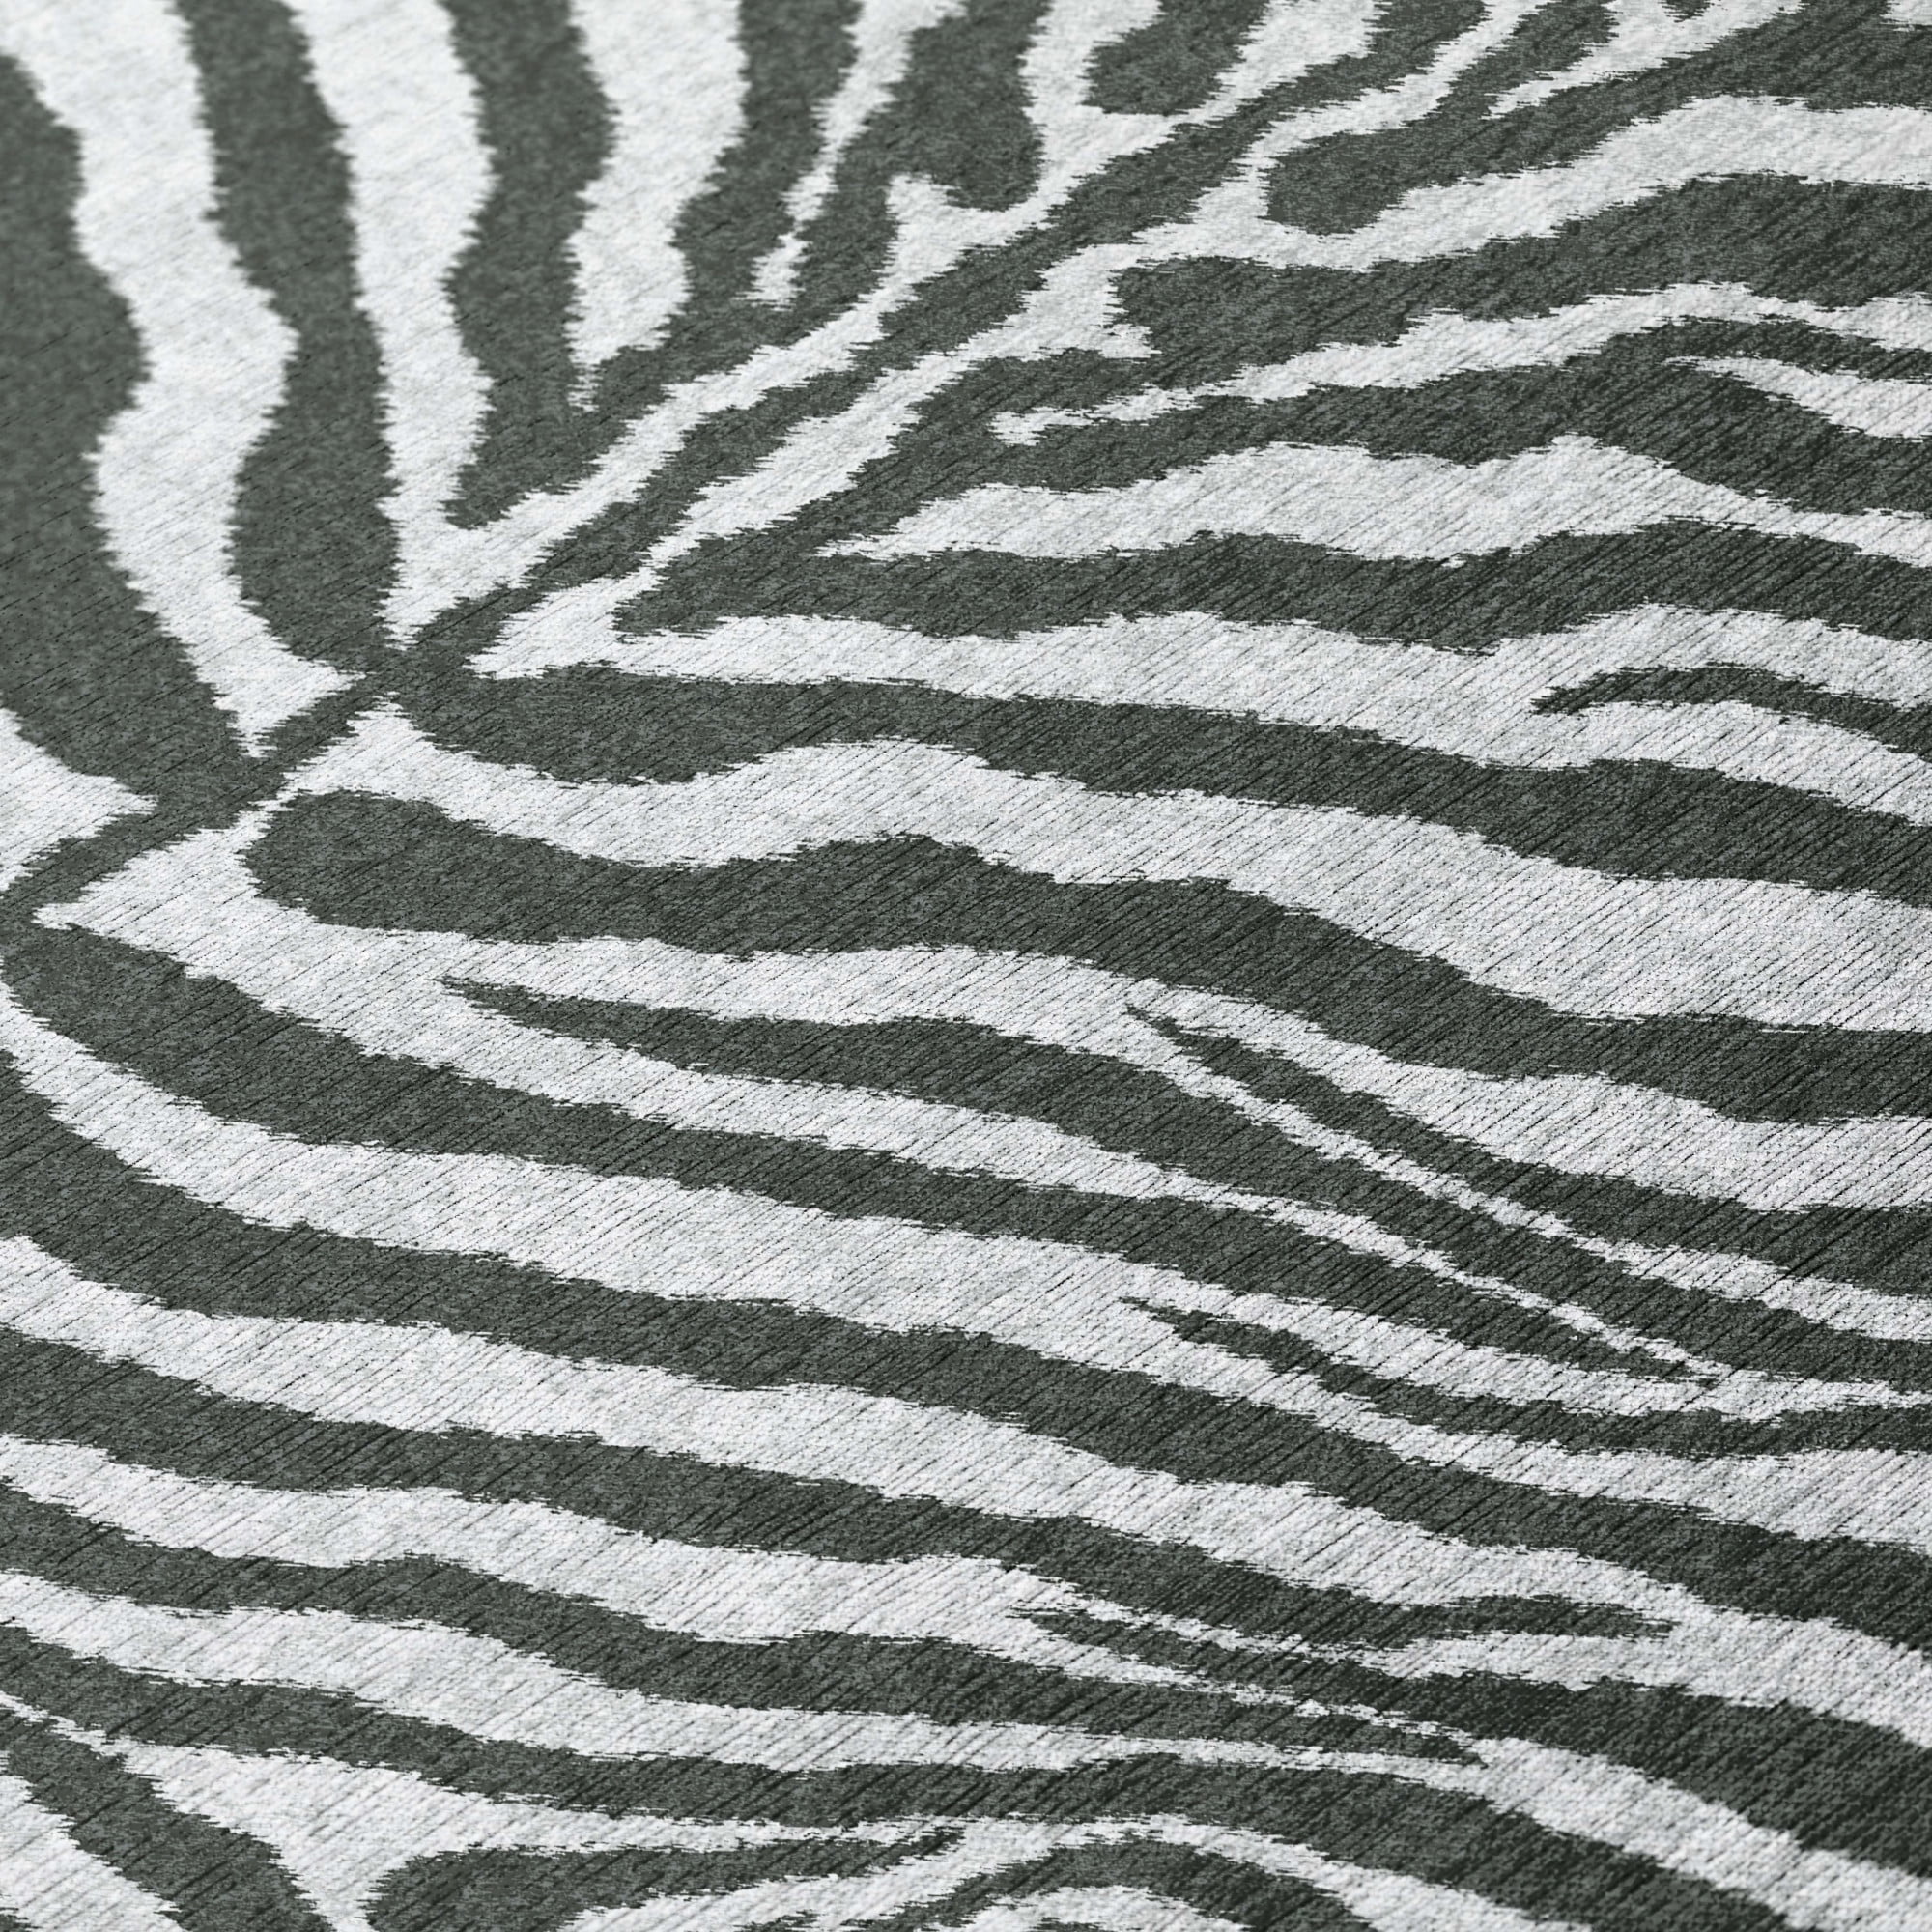 Safari Black and White Tiger/Zebra Animal Print 9' x 12' Non-Skid Area Rug